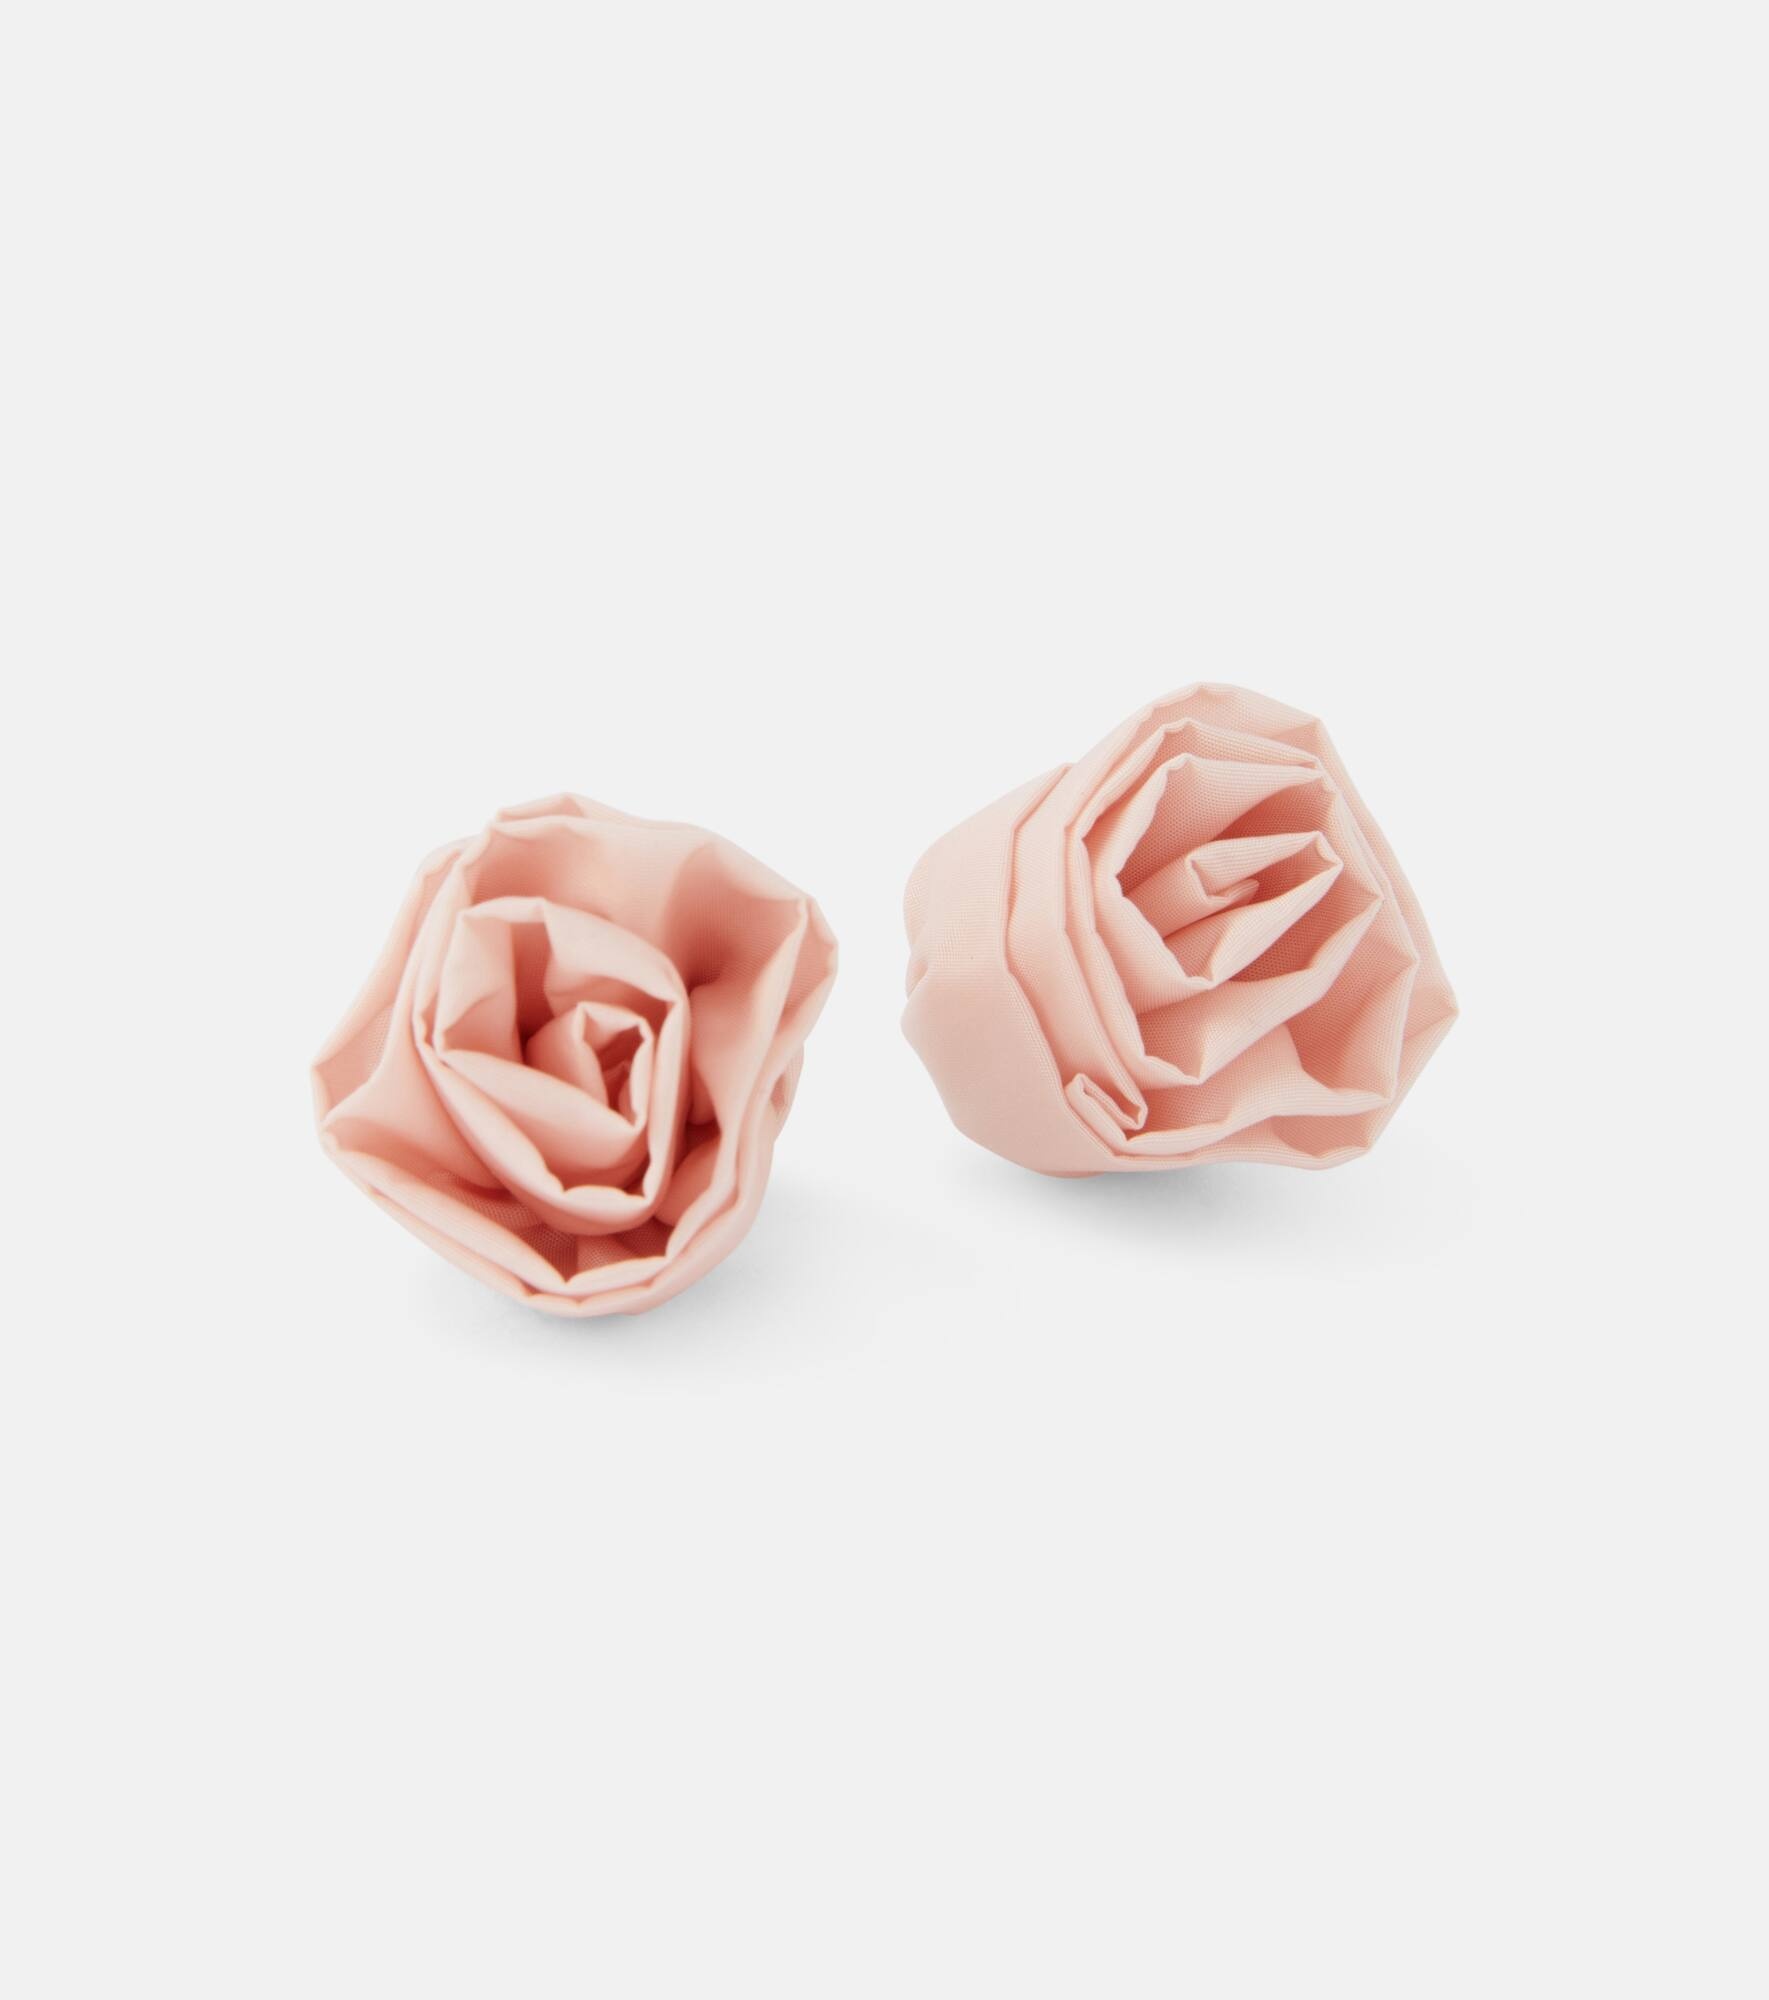 Rose earrings - 4